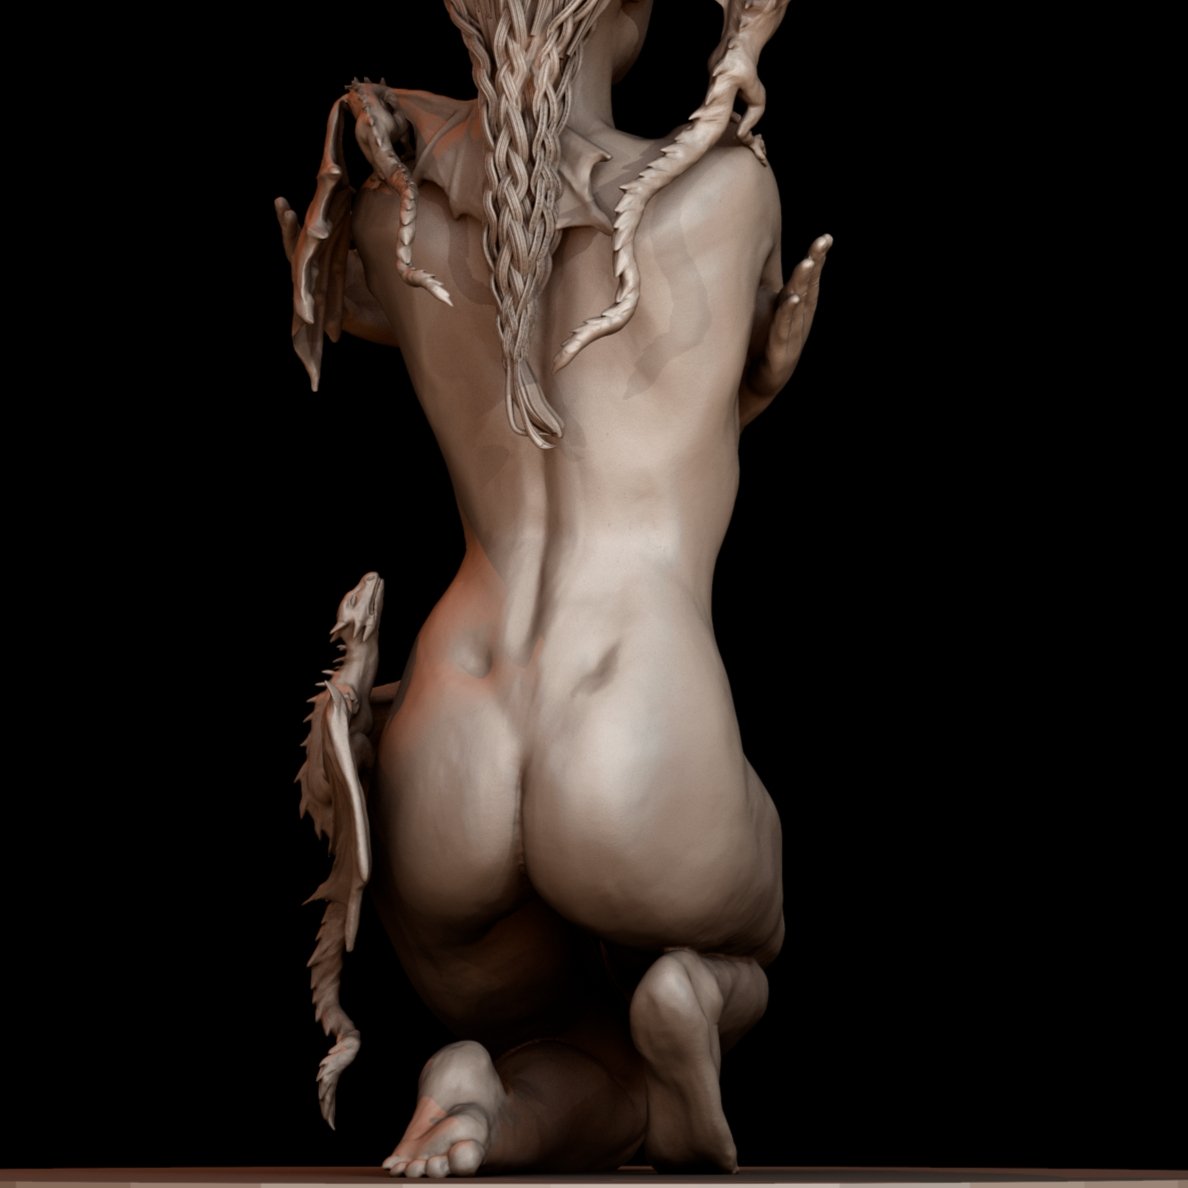 Targaryen Daenerys 3D Printed figurine Fanart by ca_3d_art